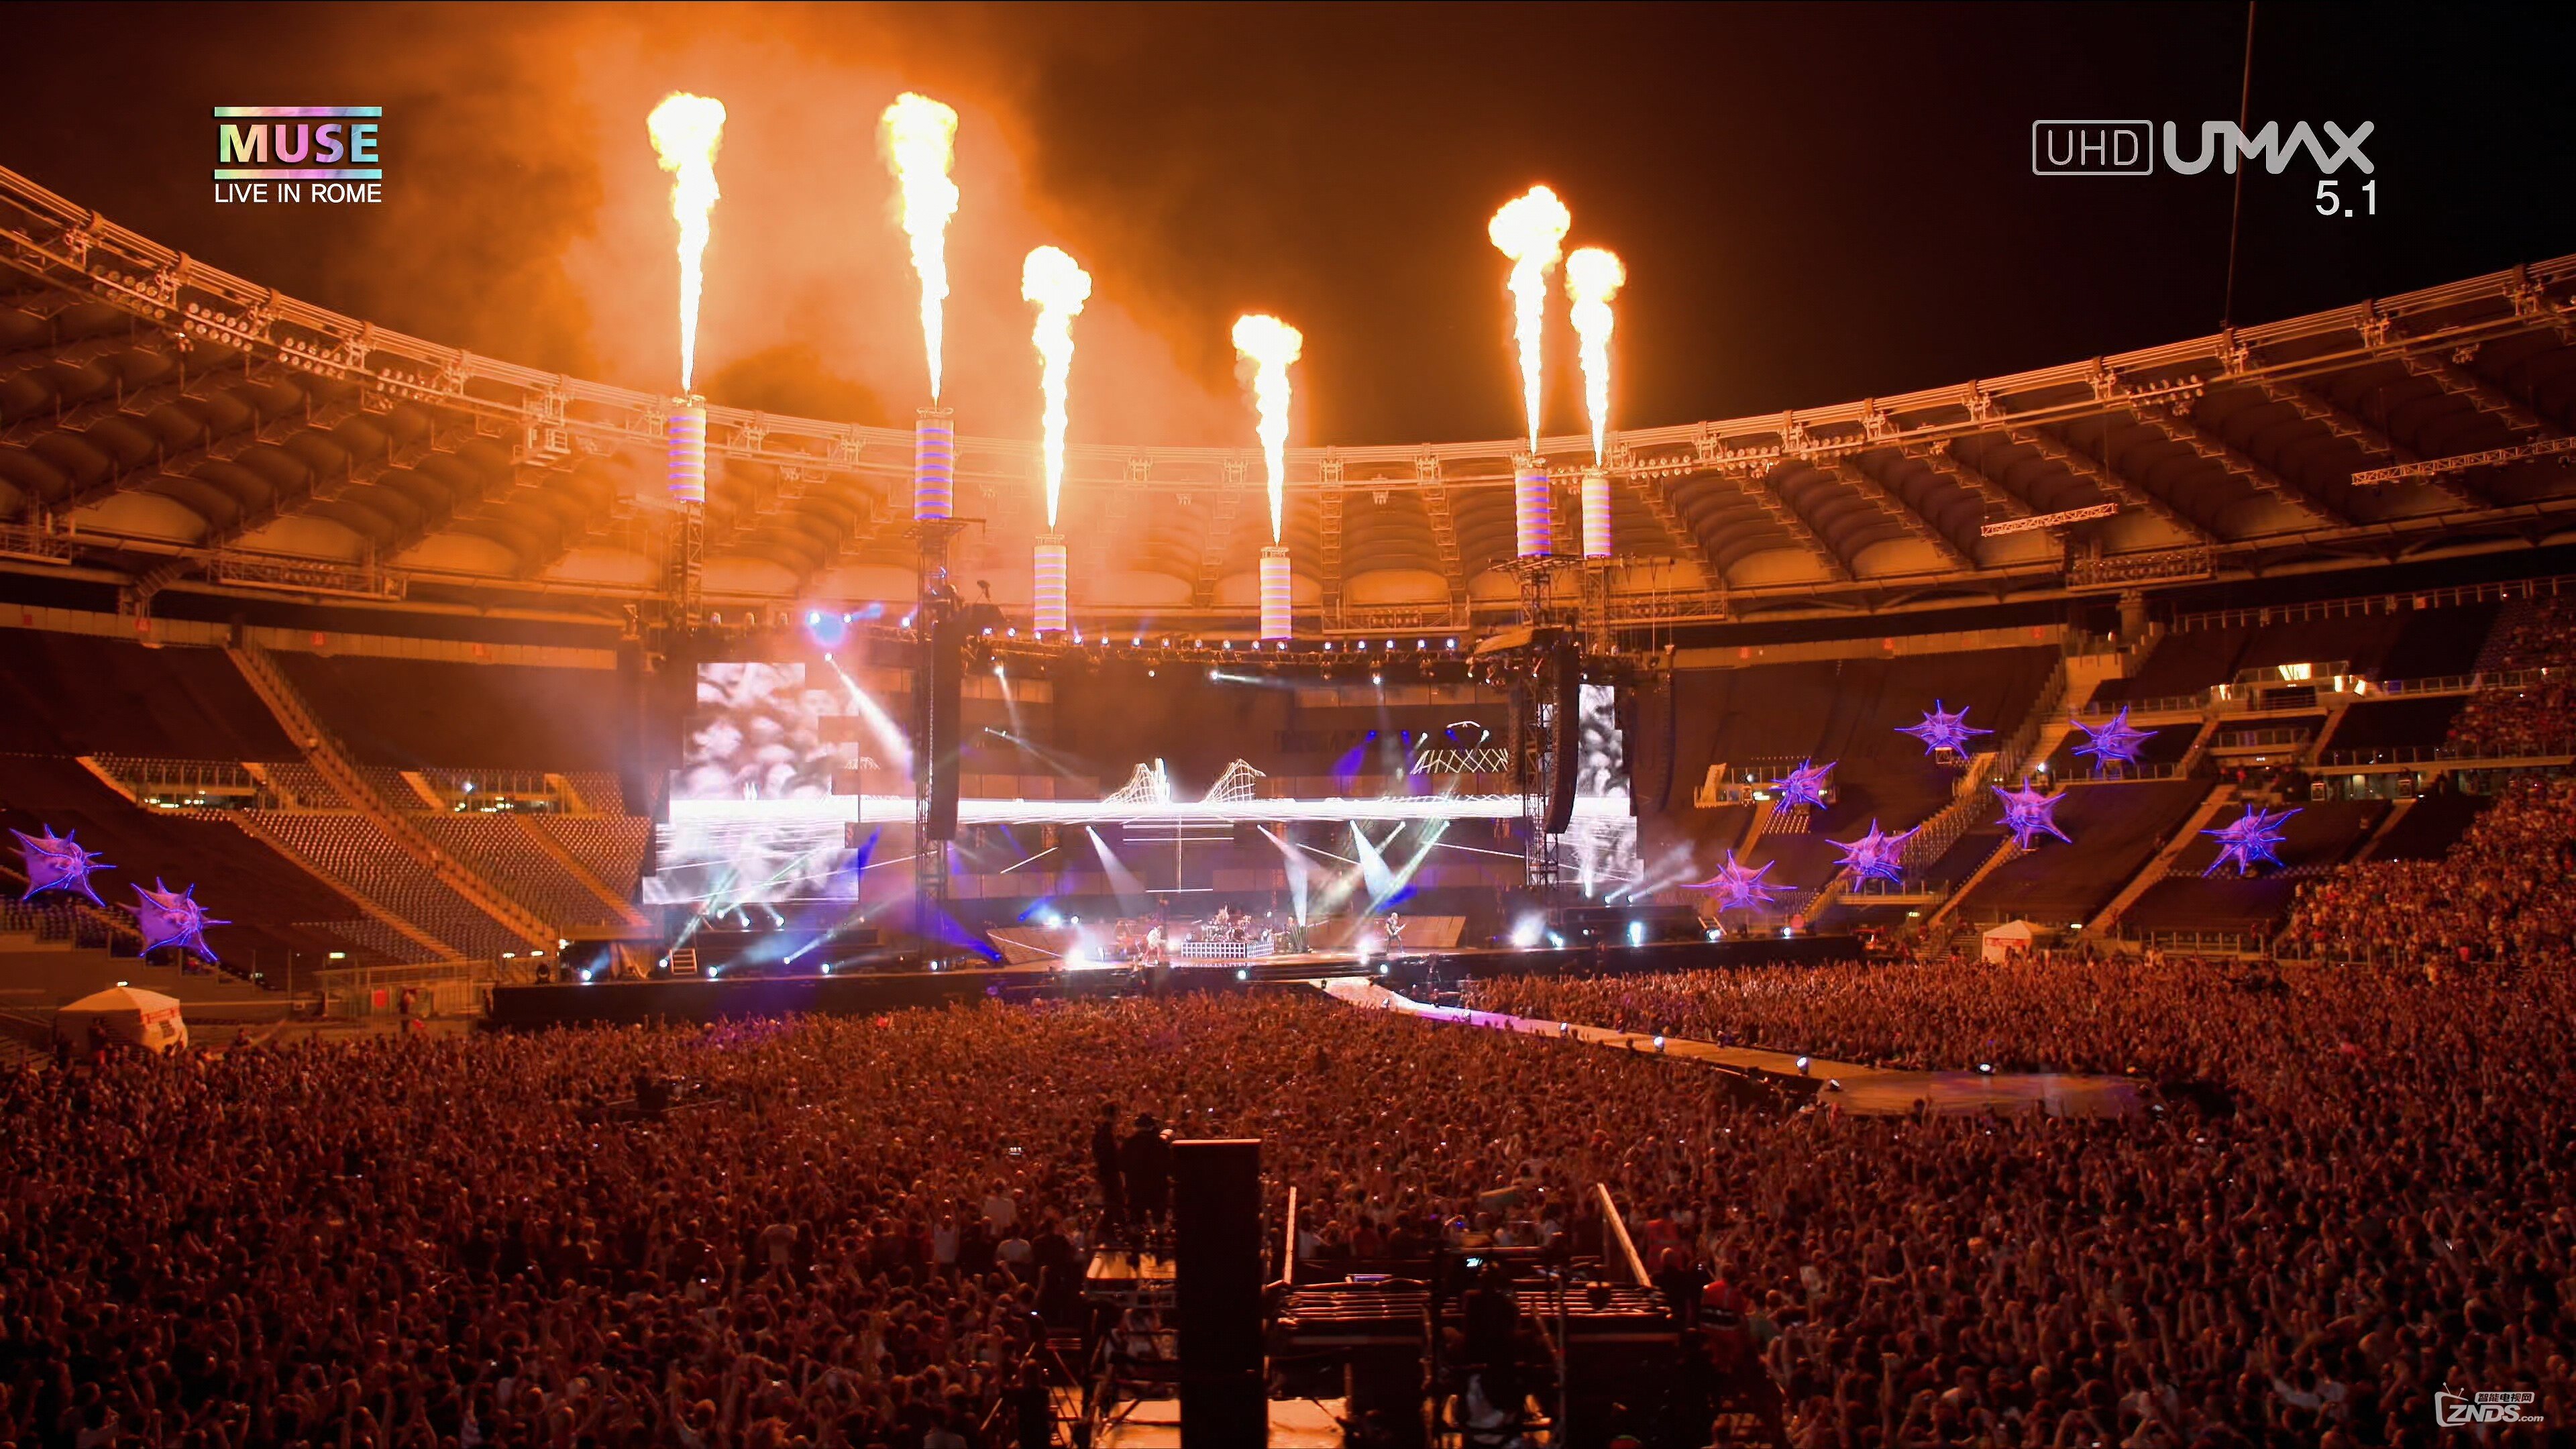 Muse.Live.At.Rome.Olympic.Stadium.2013.2160p.UHDTV.HEVC.mkv_20160312_232126.319.jpg